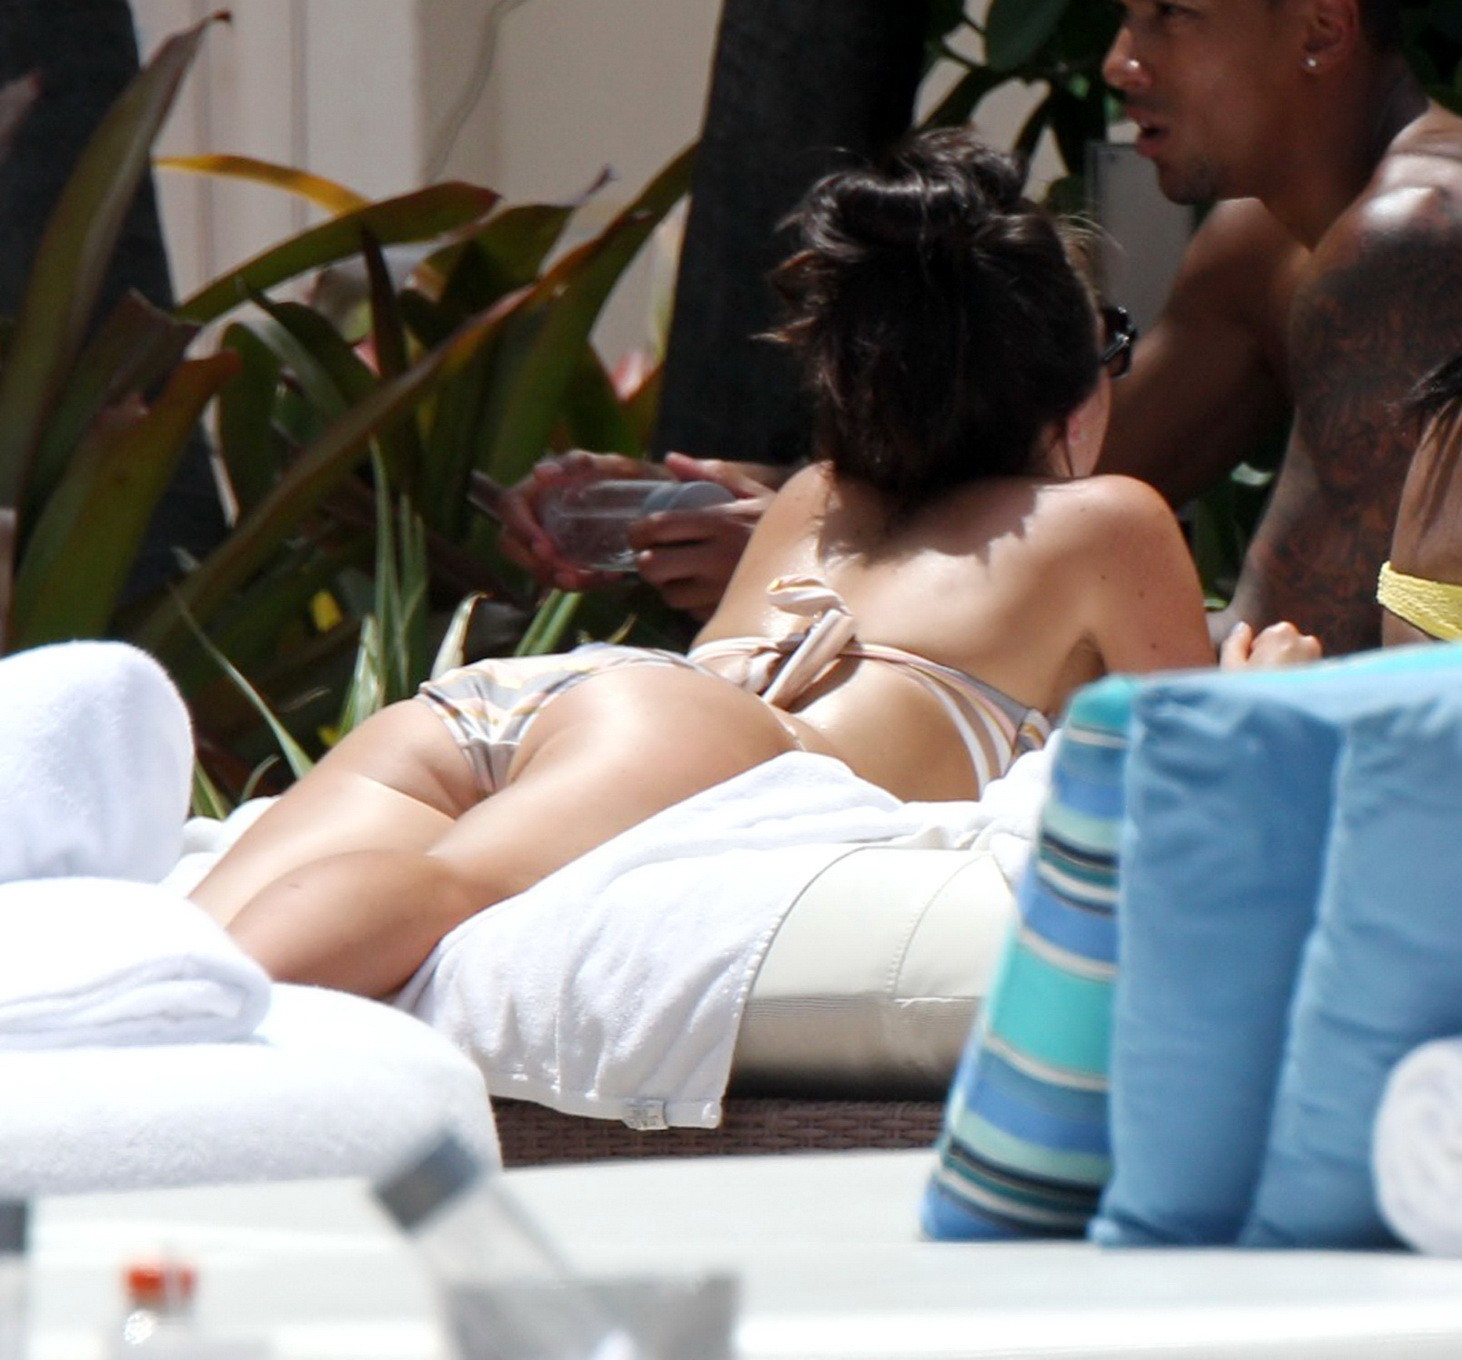 Louisa Lytton showing off her ass in bikini at the hotel pool in Miami #75229775